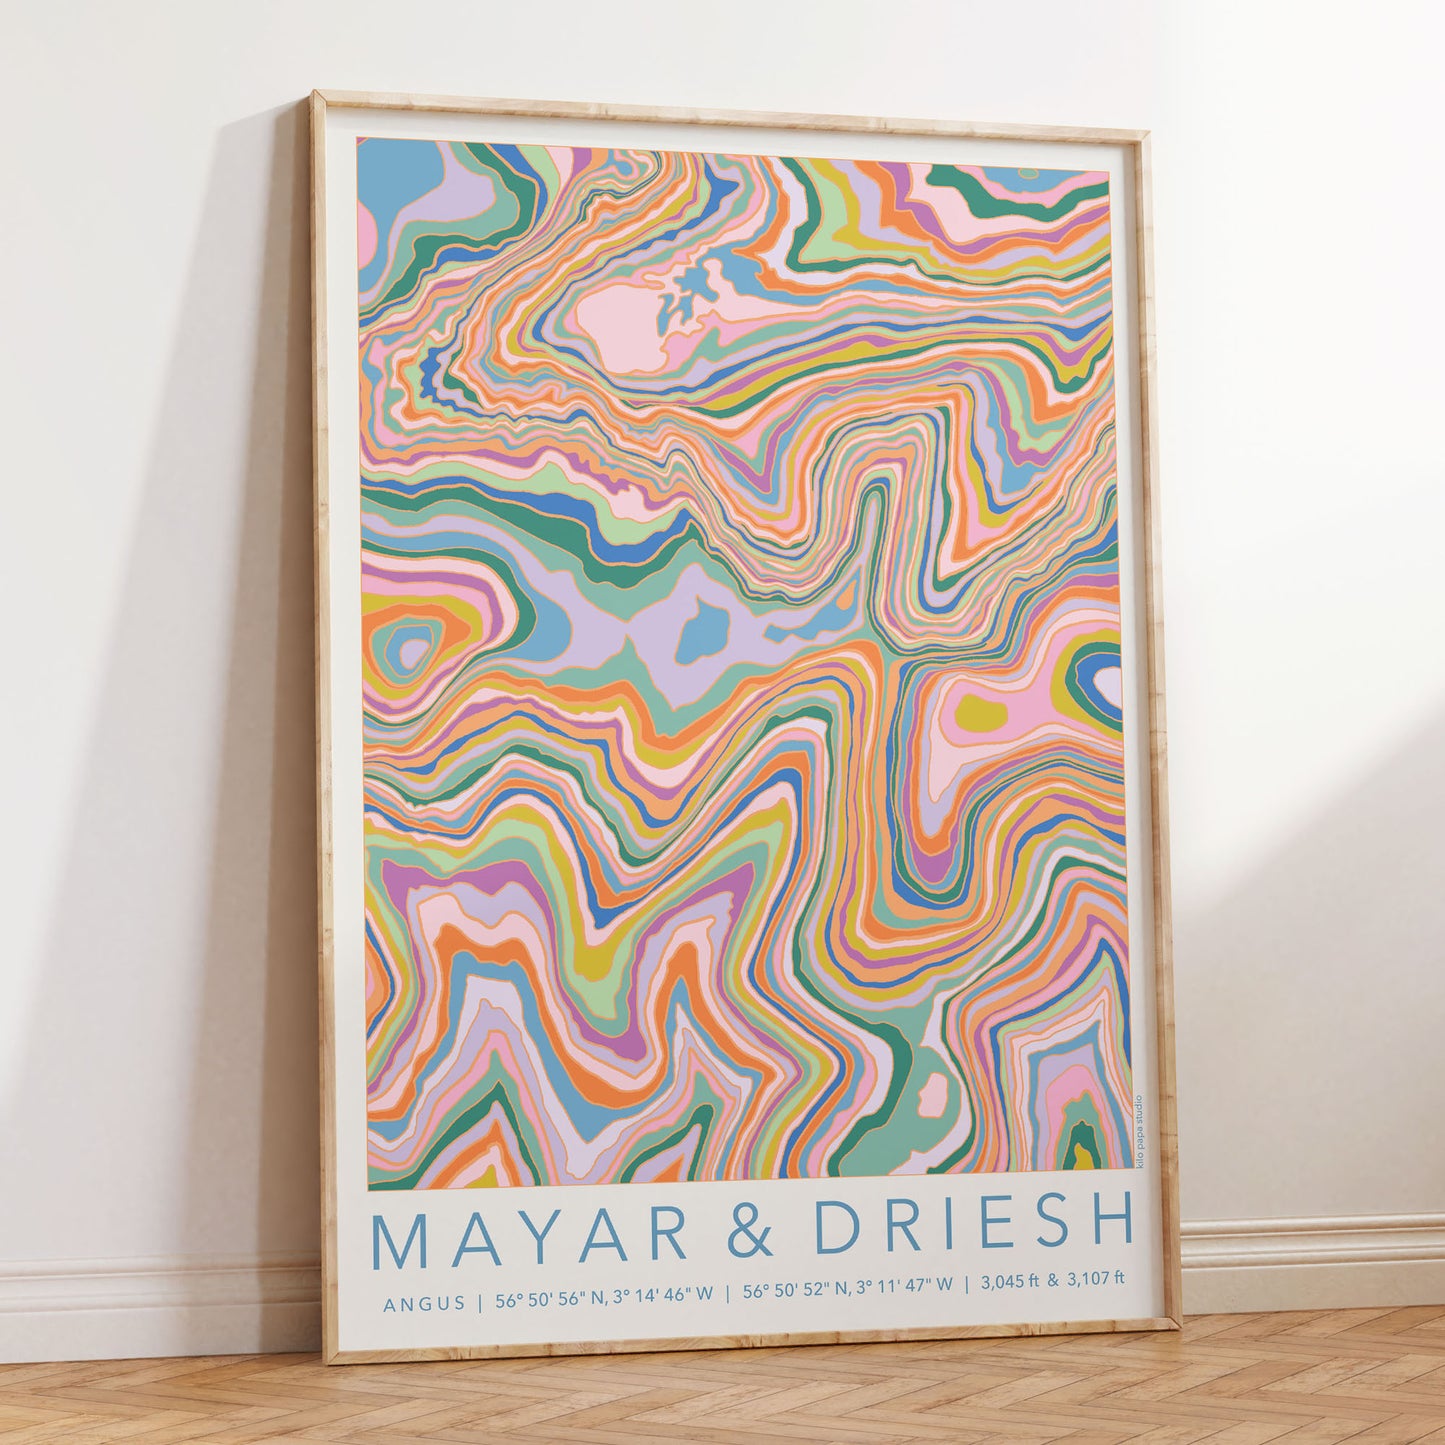 Mayar & Driesh Colourful Topography Map Print